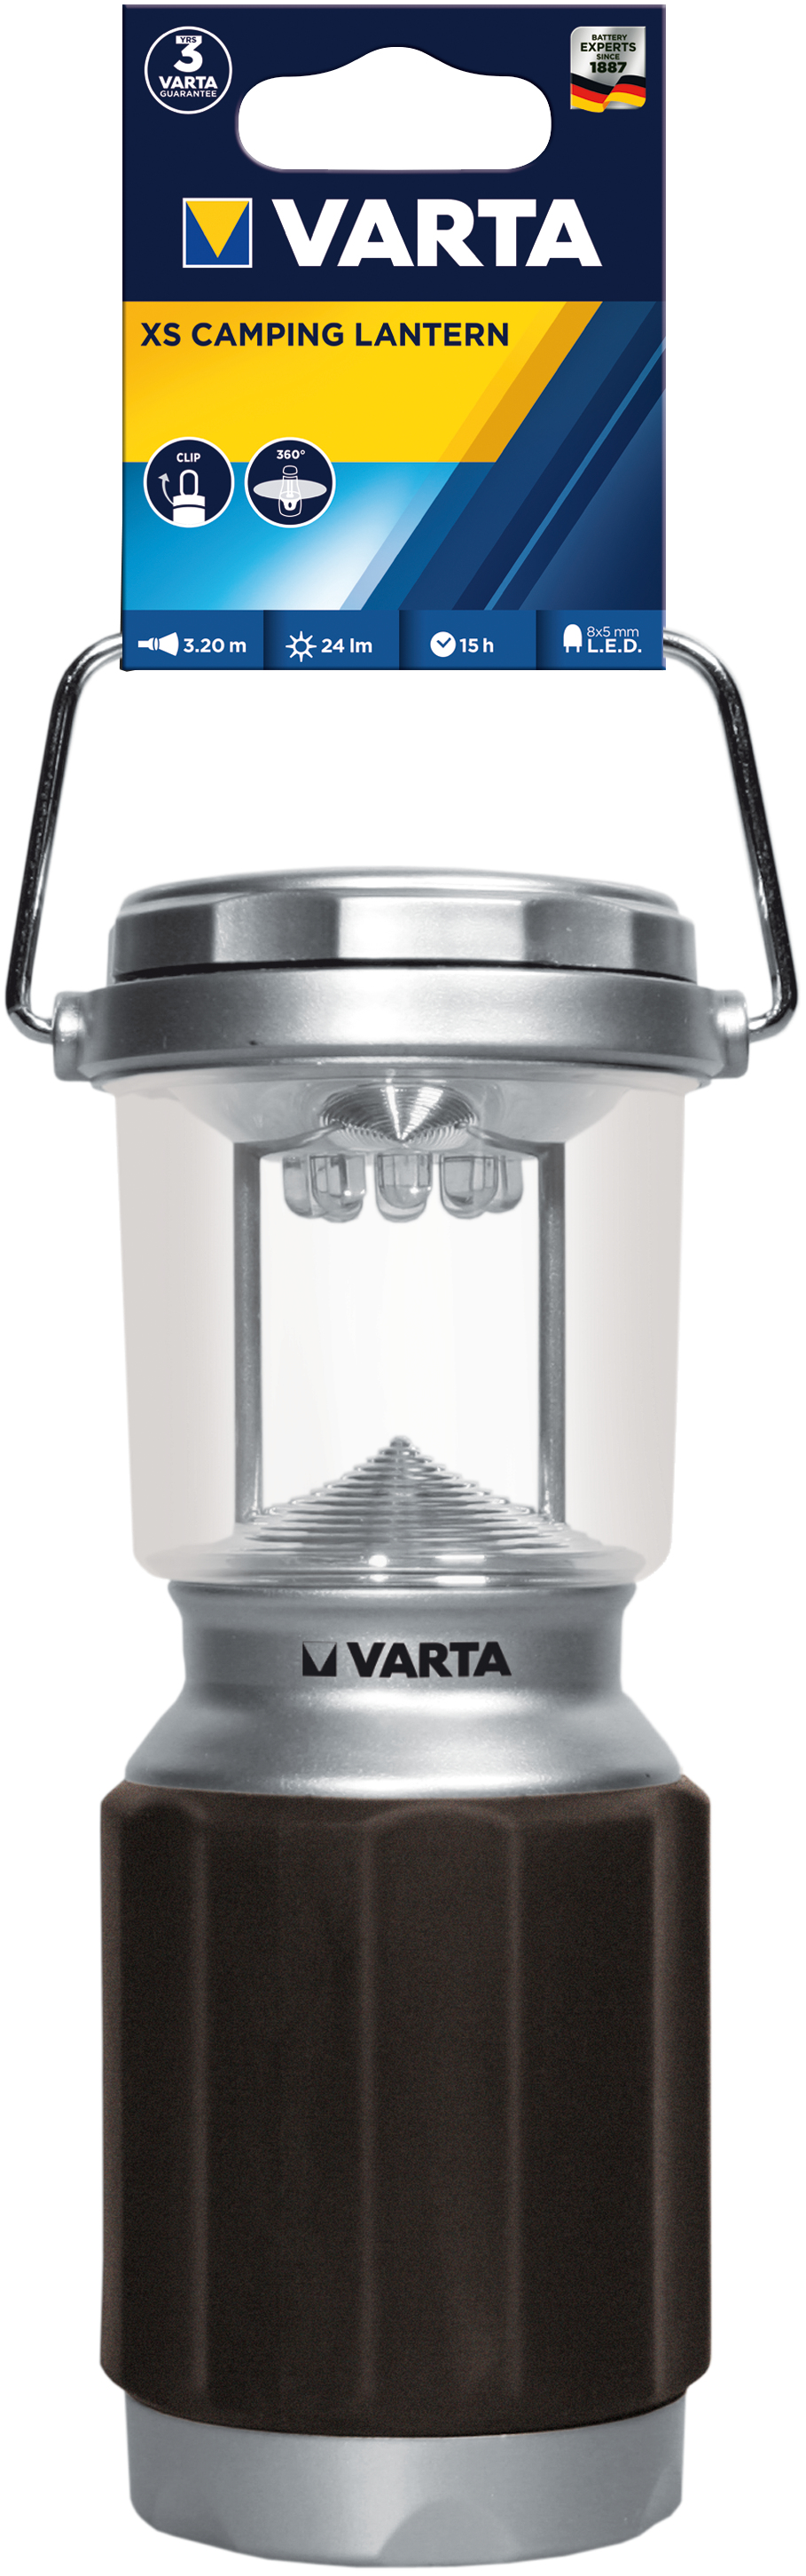 Varta XS Camp Lantern LED 4AA - Schwarz - Silber - AA - 15 h - 180 mm - 274 g